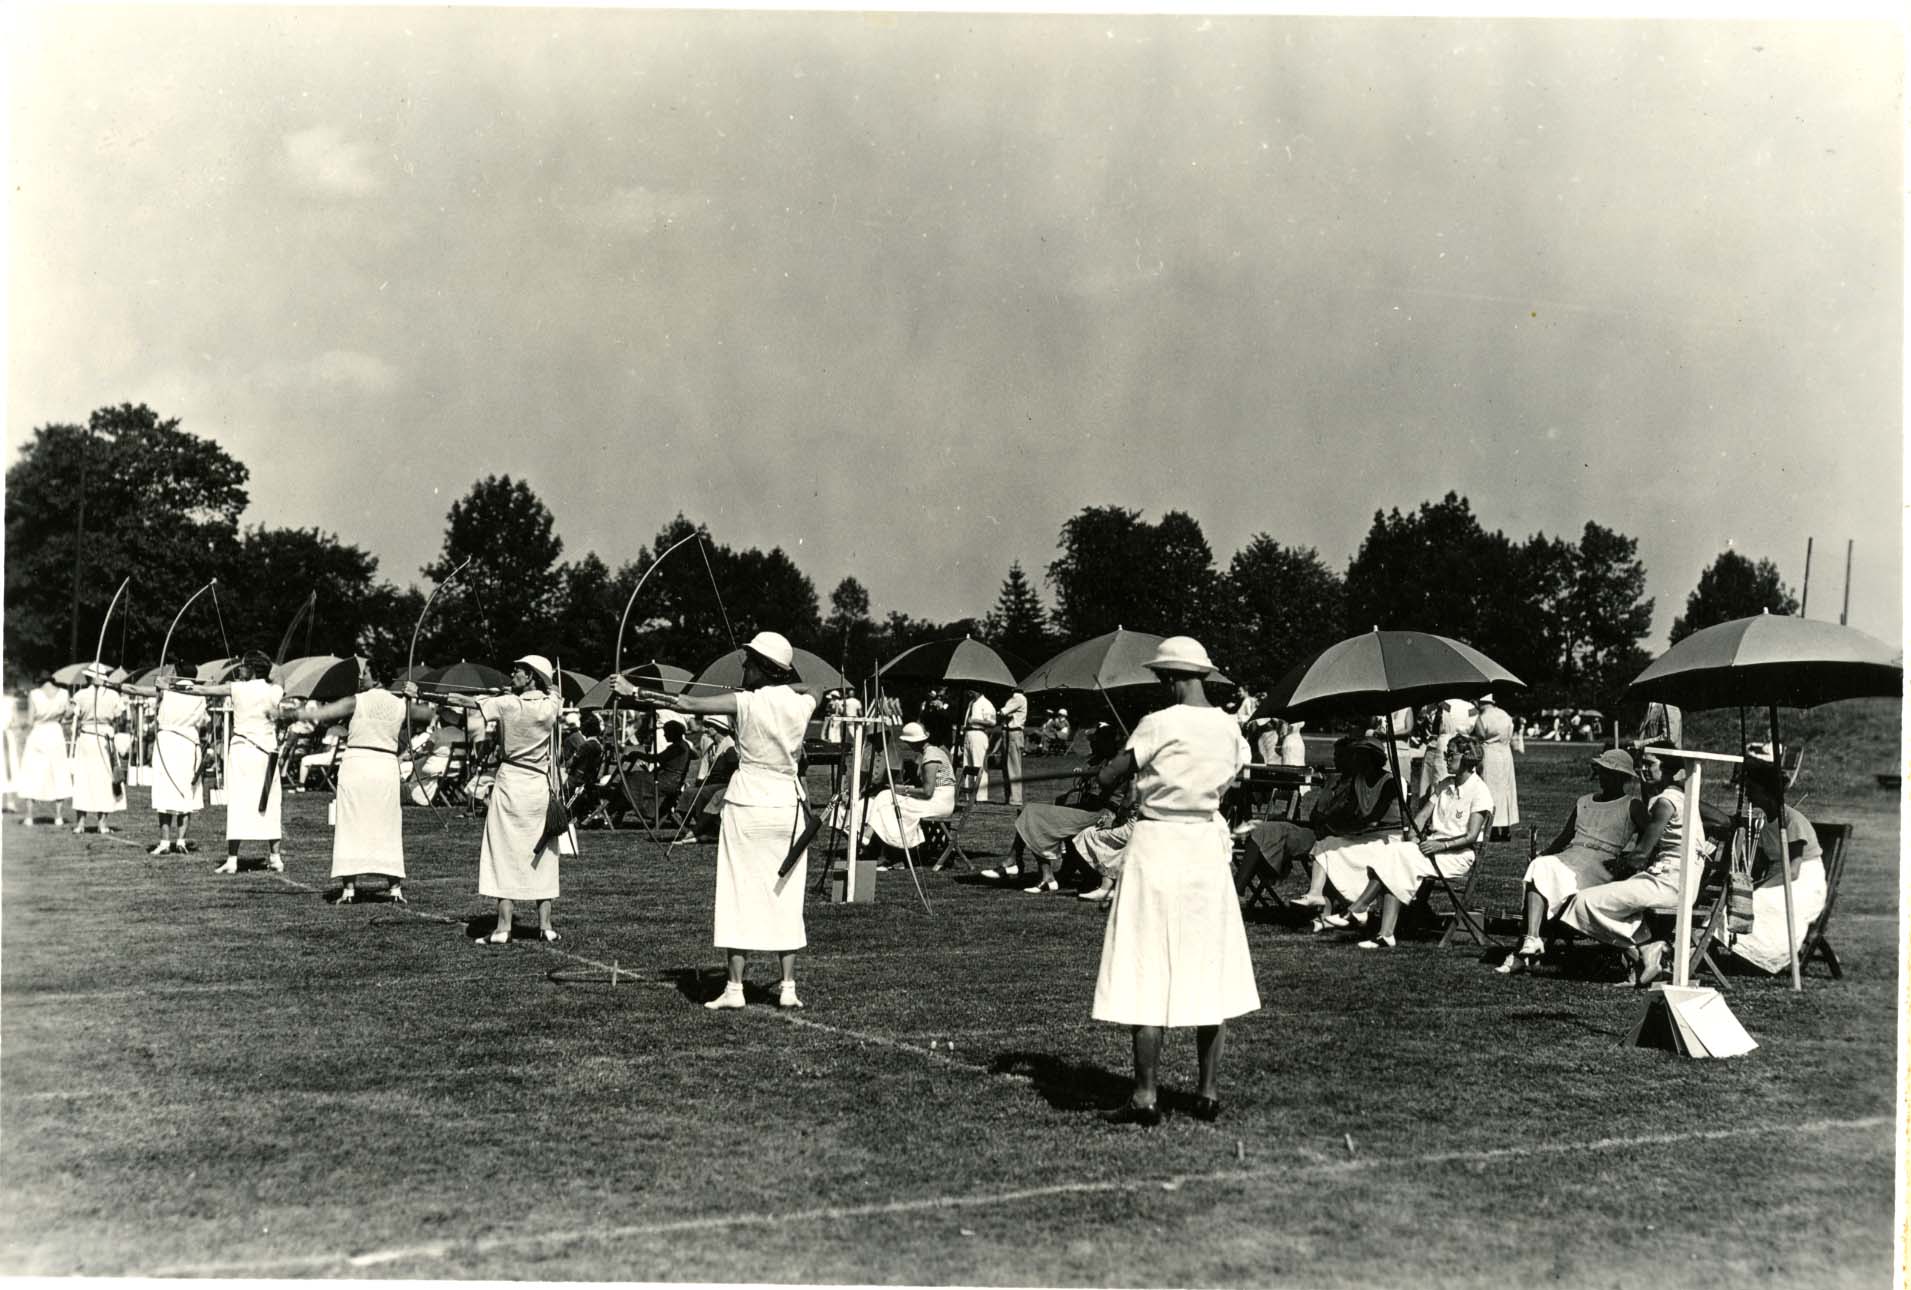 National Archery Tournament, Storrs, CT, 1934